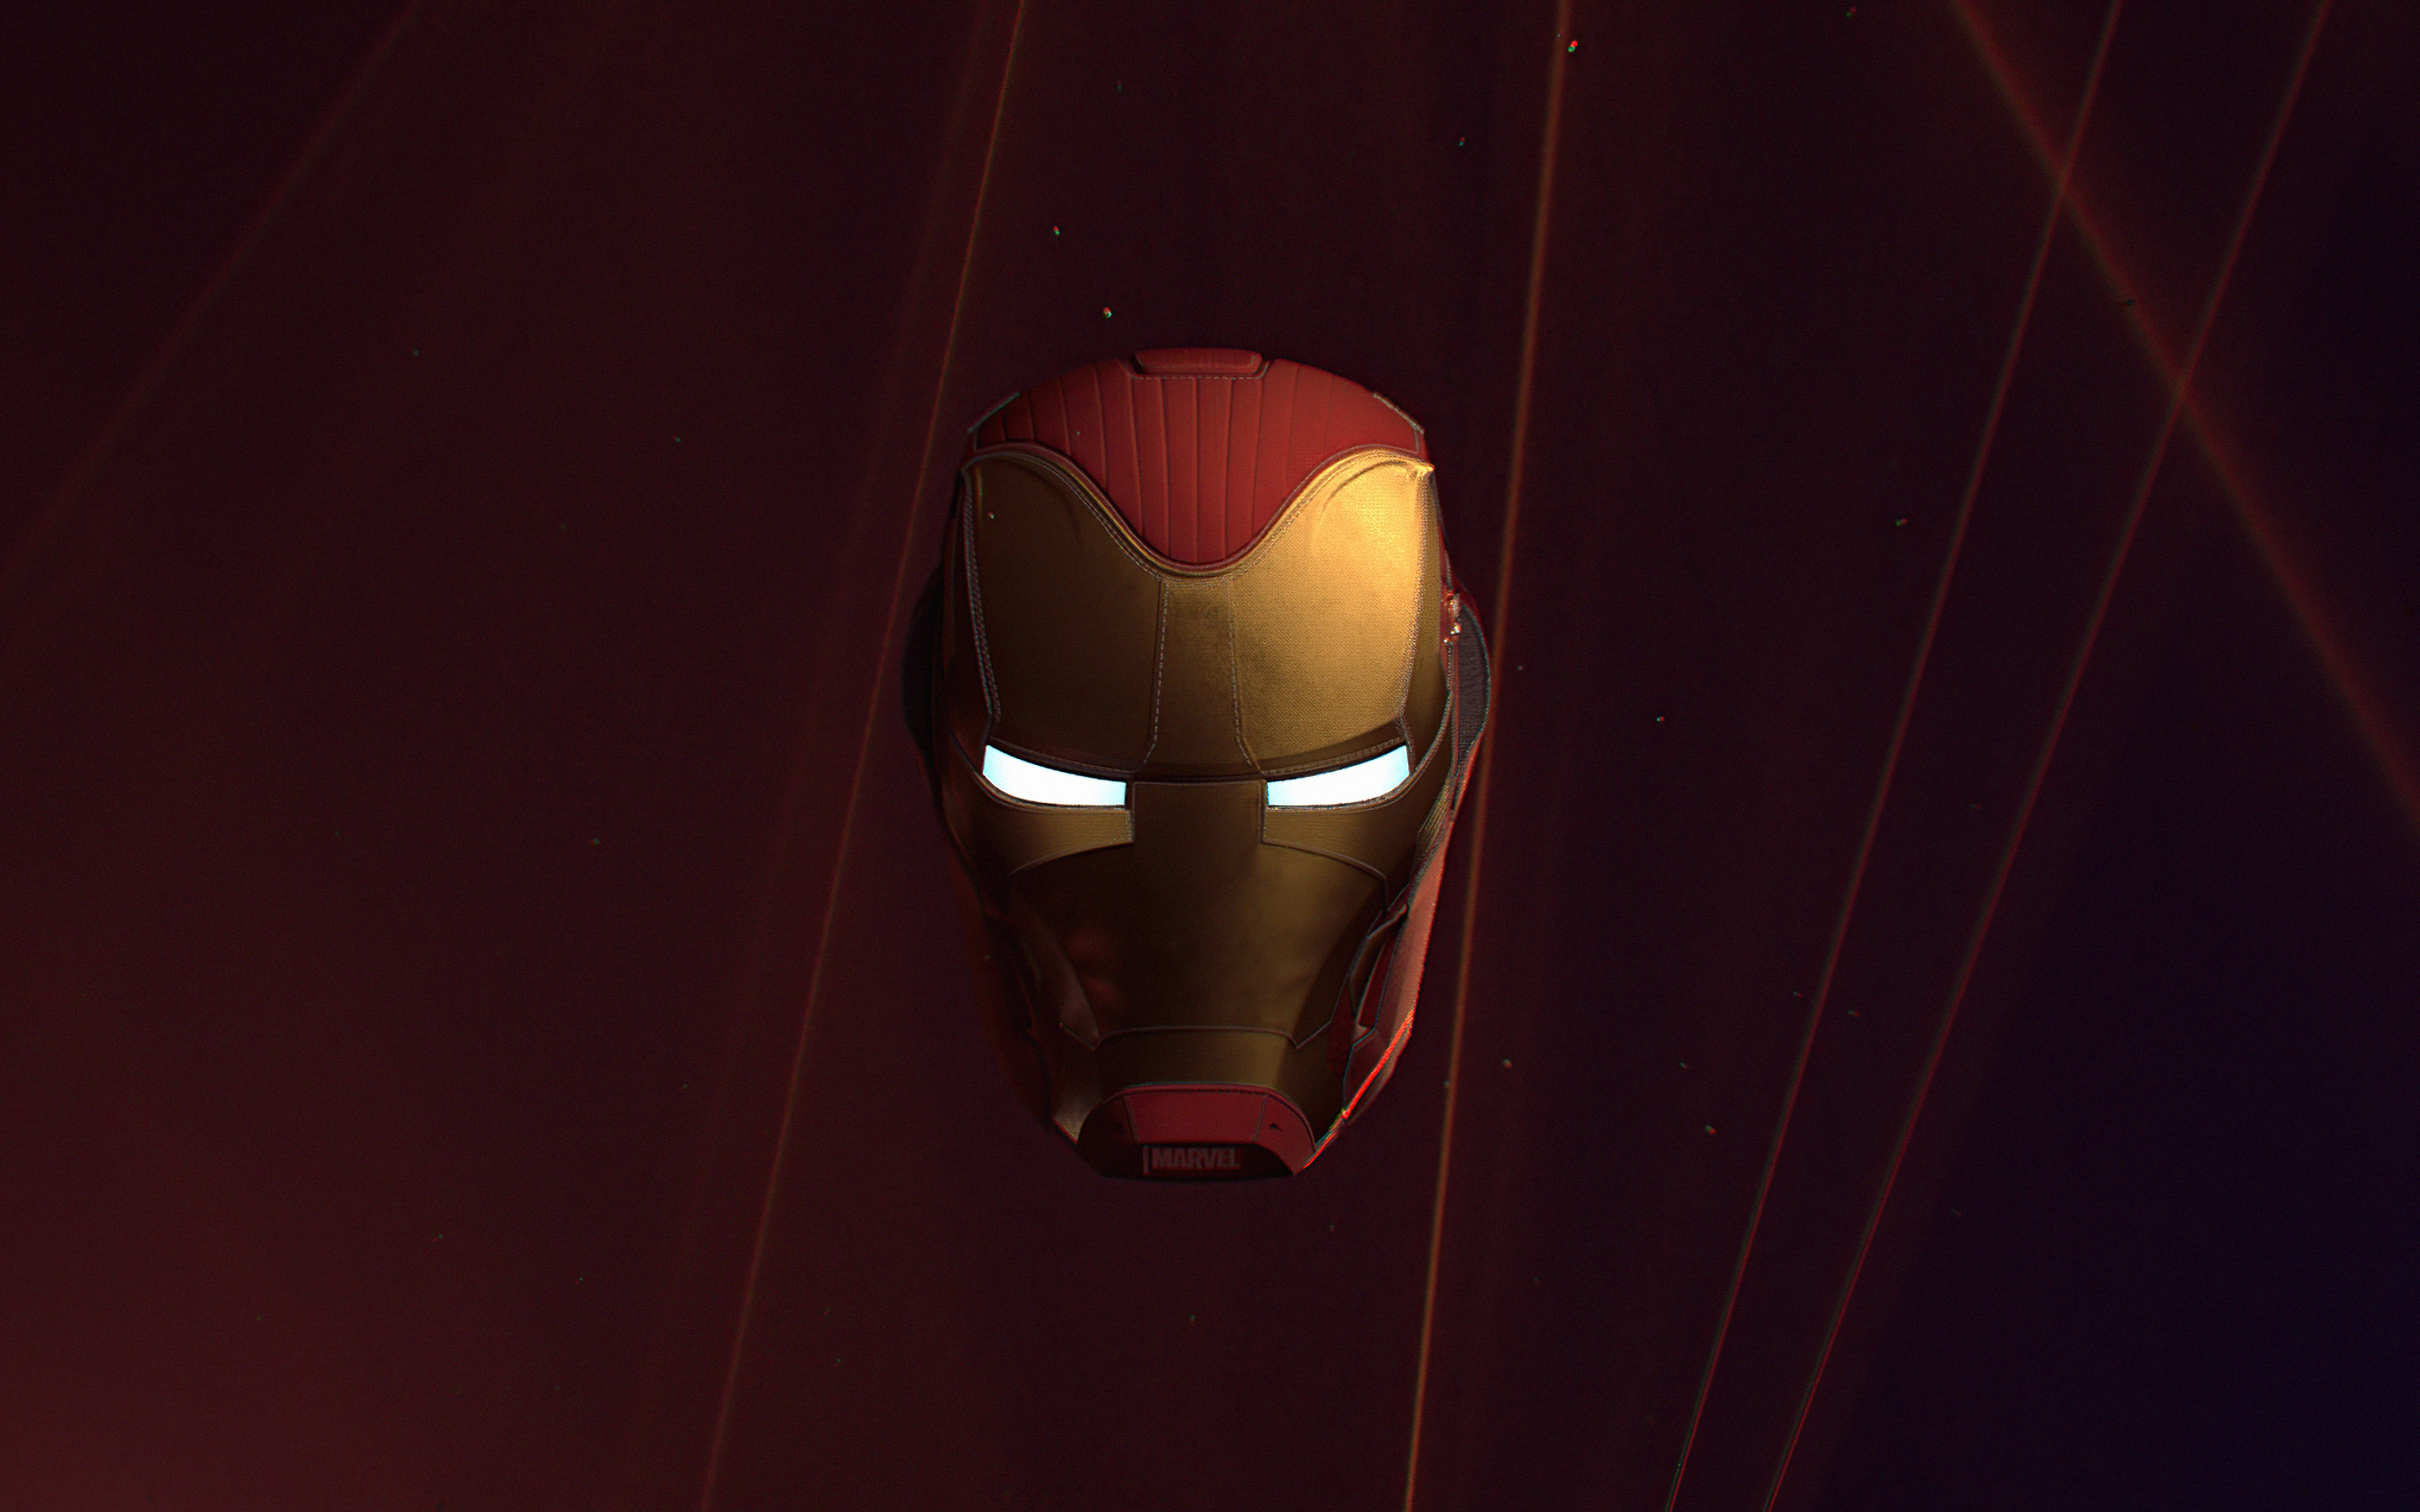 Avengers Endgame Iron Man Helmet IPhone Wallpaper  IPhone Wallpapers   iPhone Wallpapers